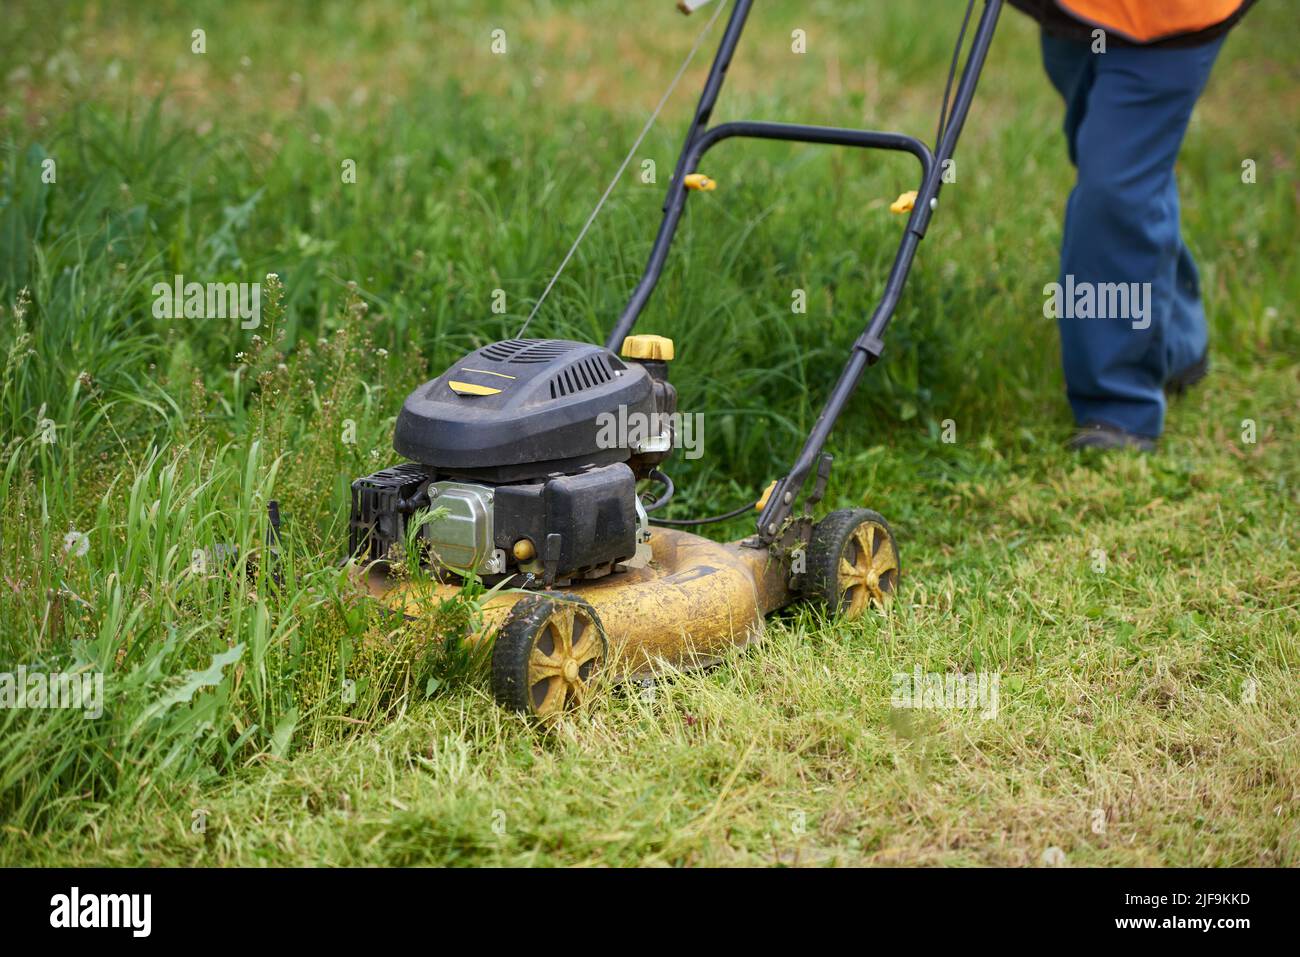 Petrol lawn mower cuts overgrown grass. Stock Photo